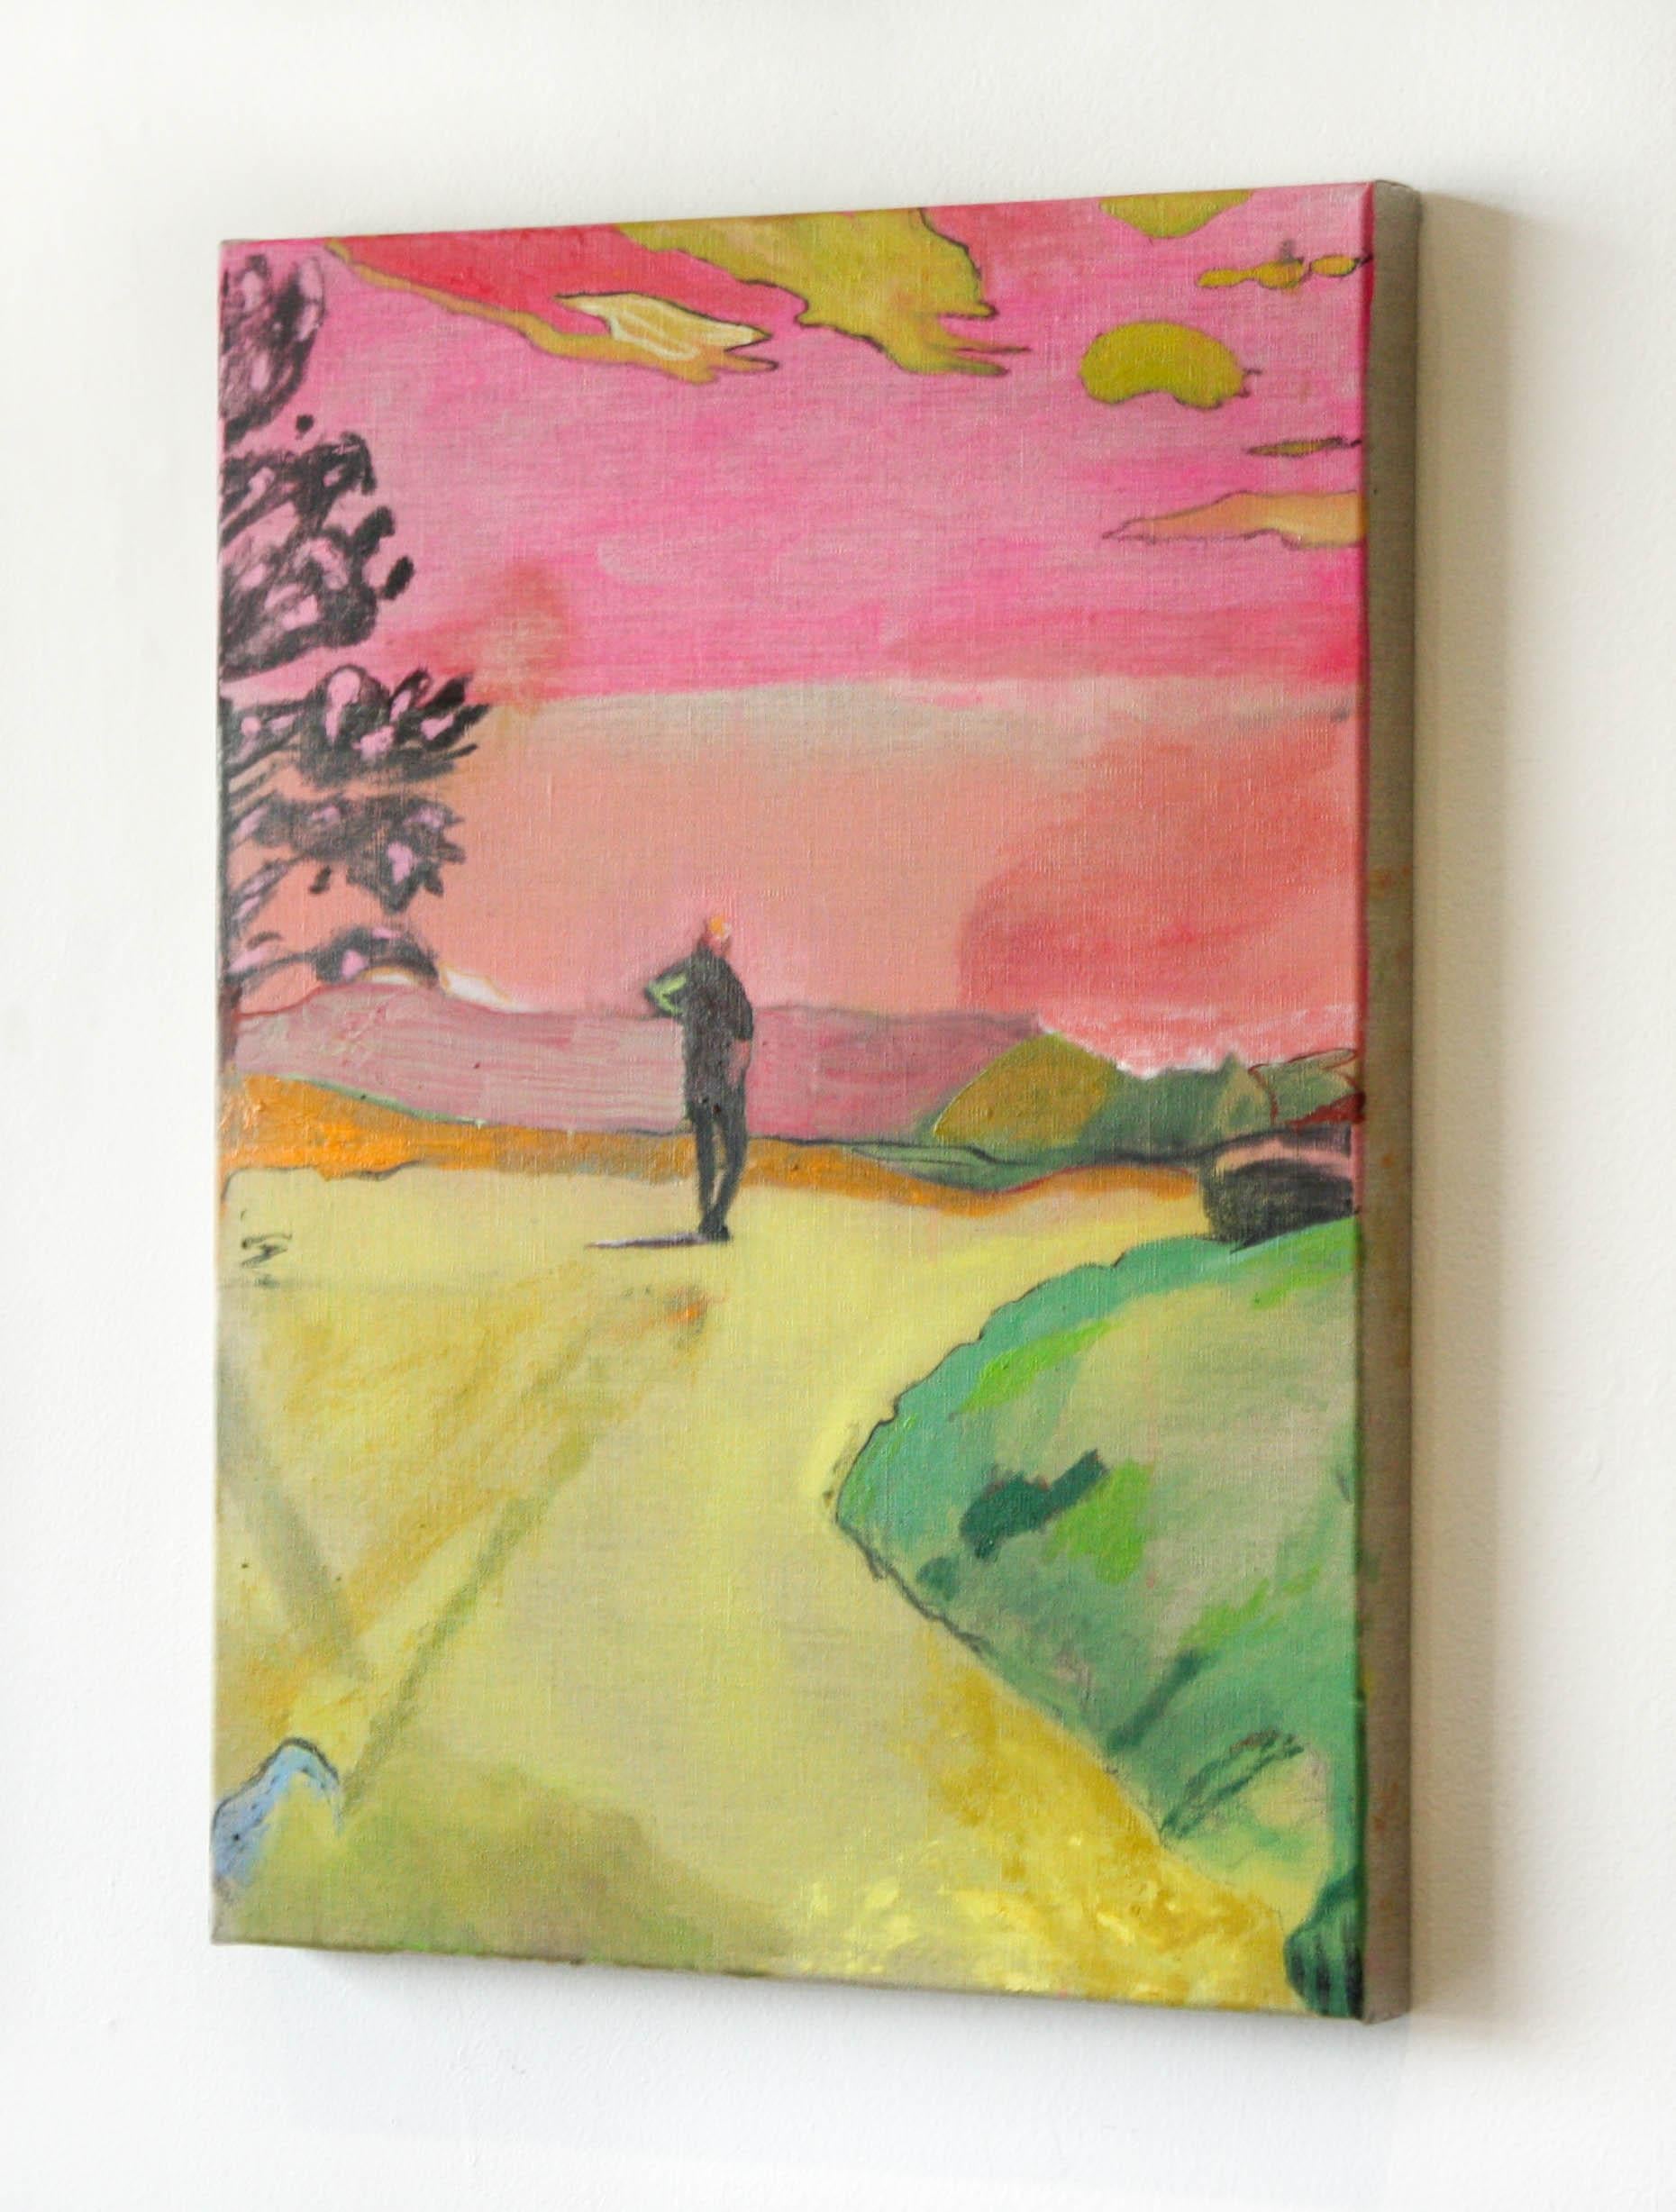 Multitude-Acrylic Paint, Charcoal, Oil Crayon, Oil Paint, Spray Paint, Landscape - Painting by John Paul Kesling